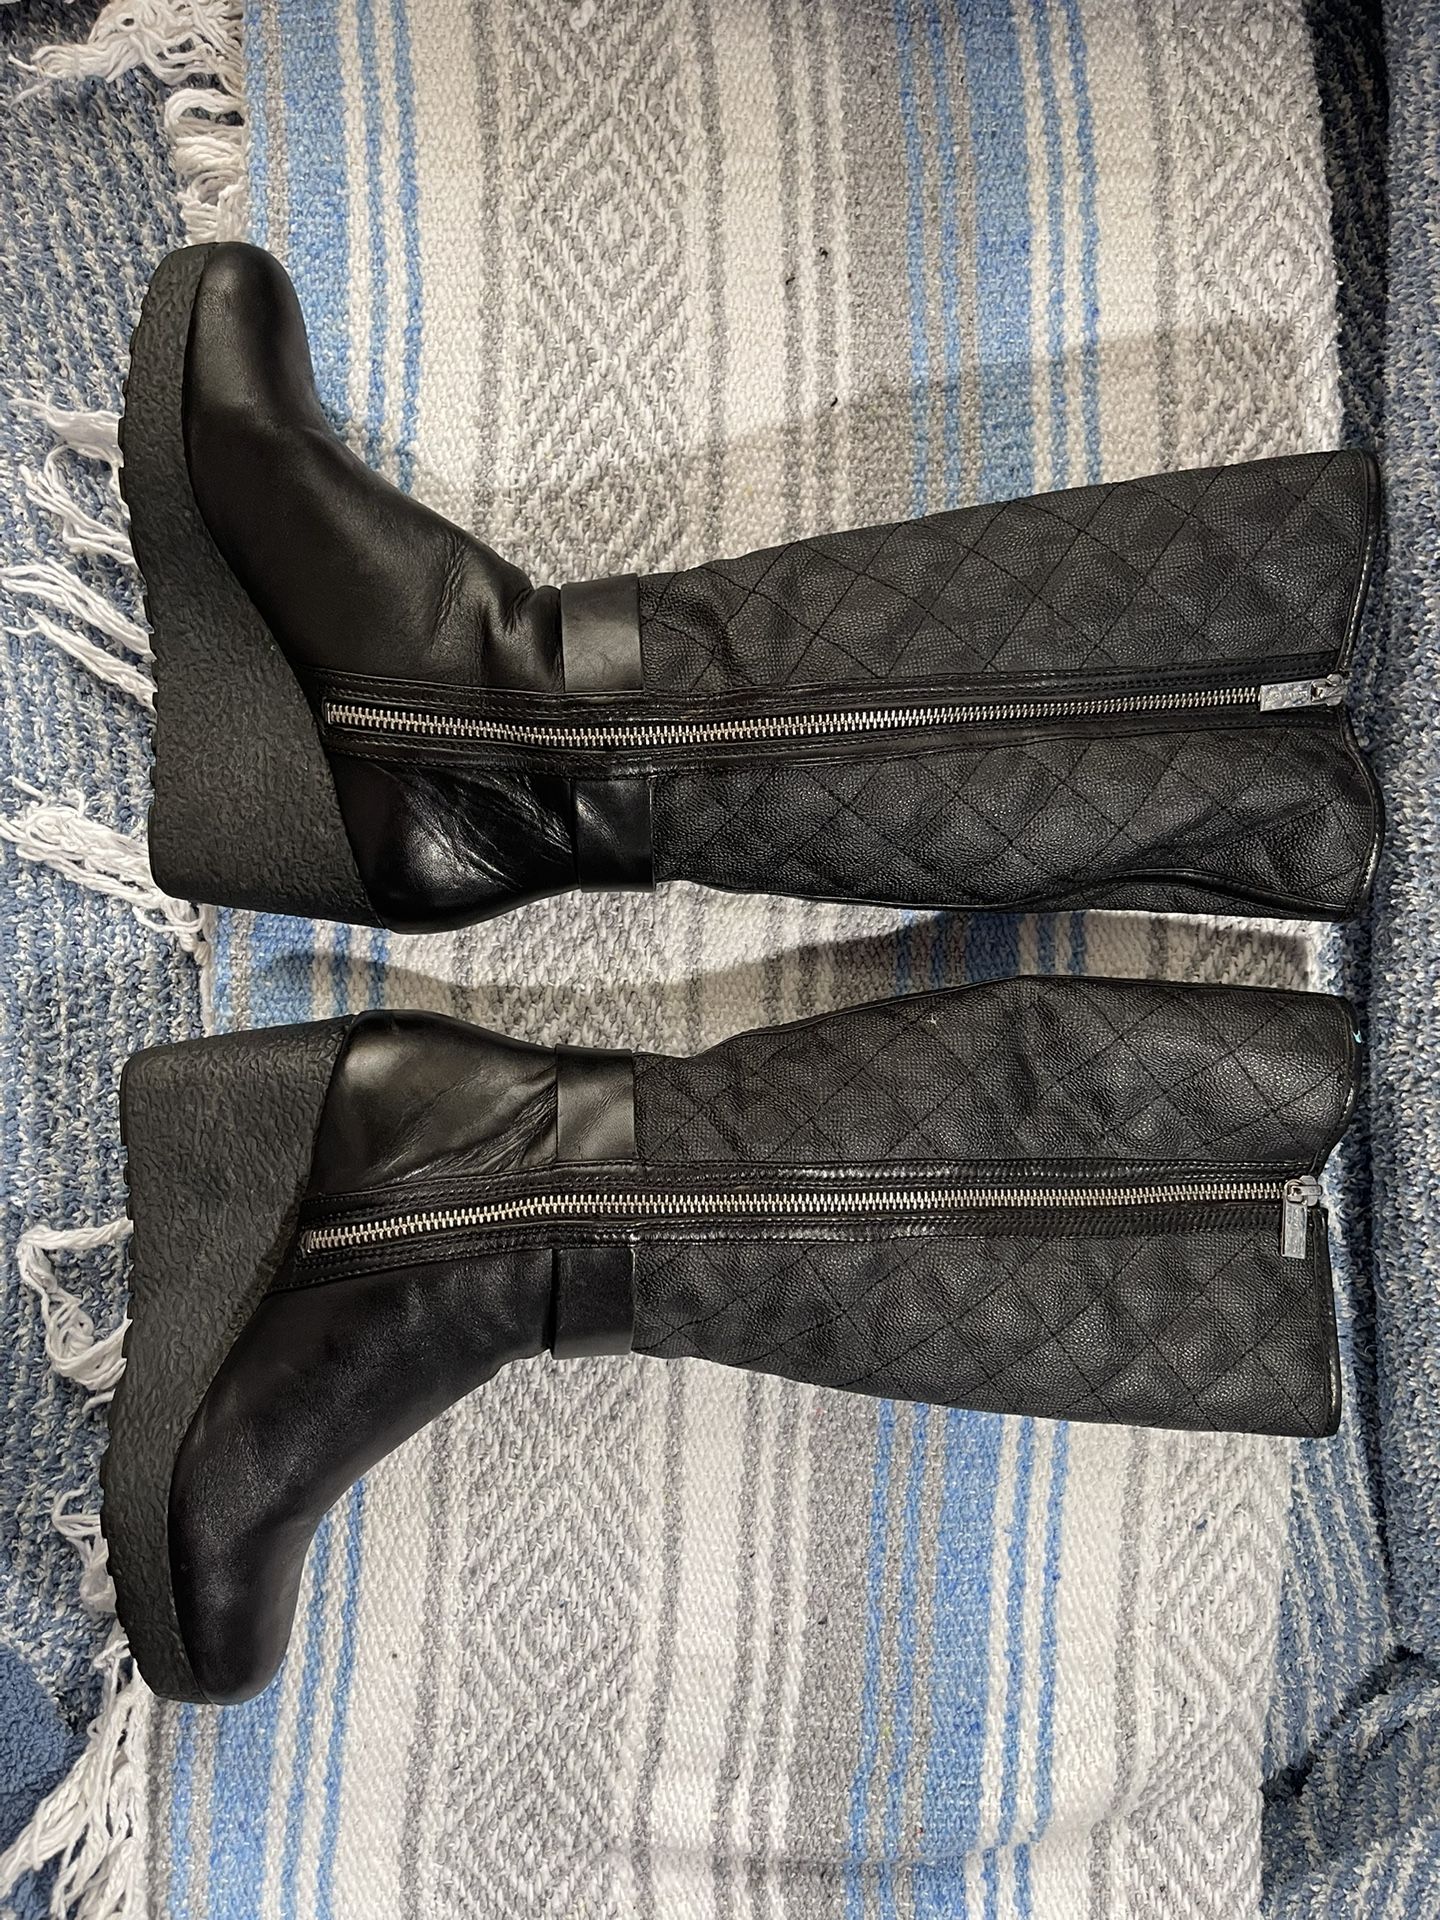 MK Black  boots Size 6 